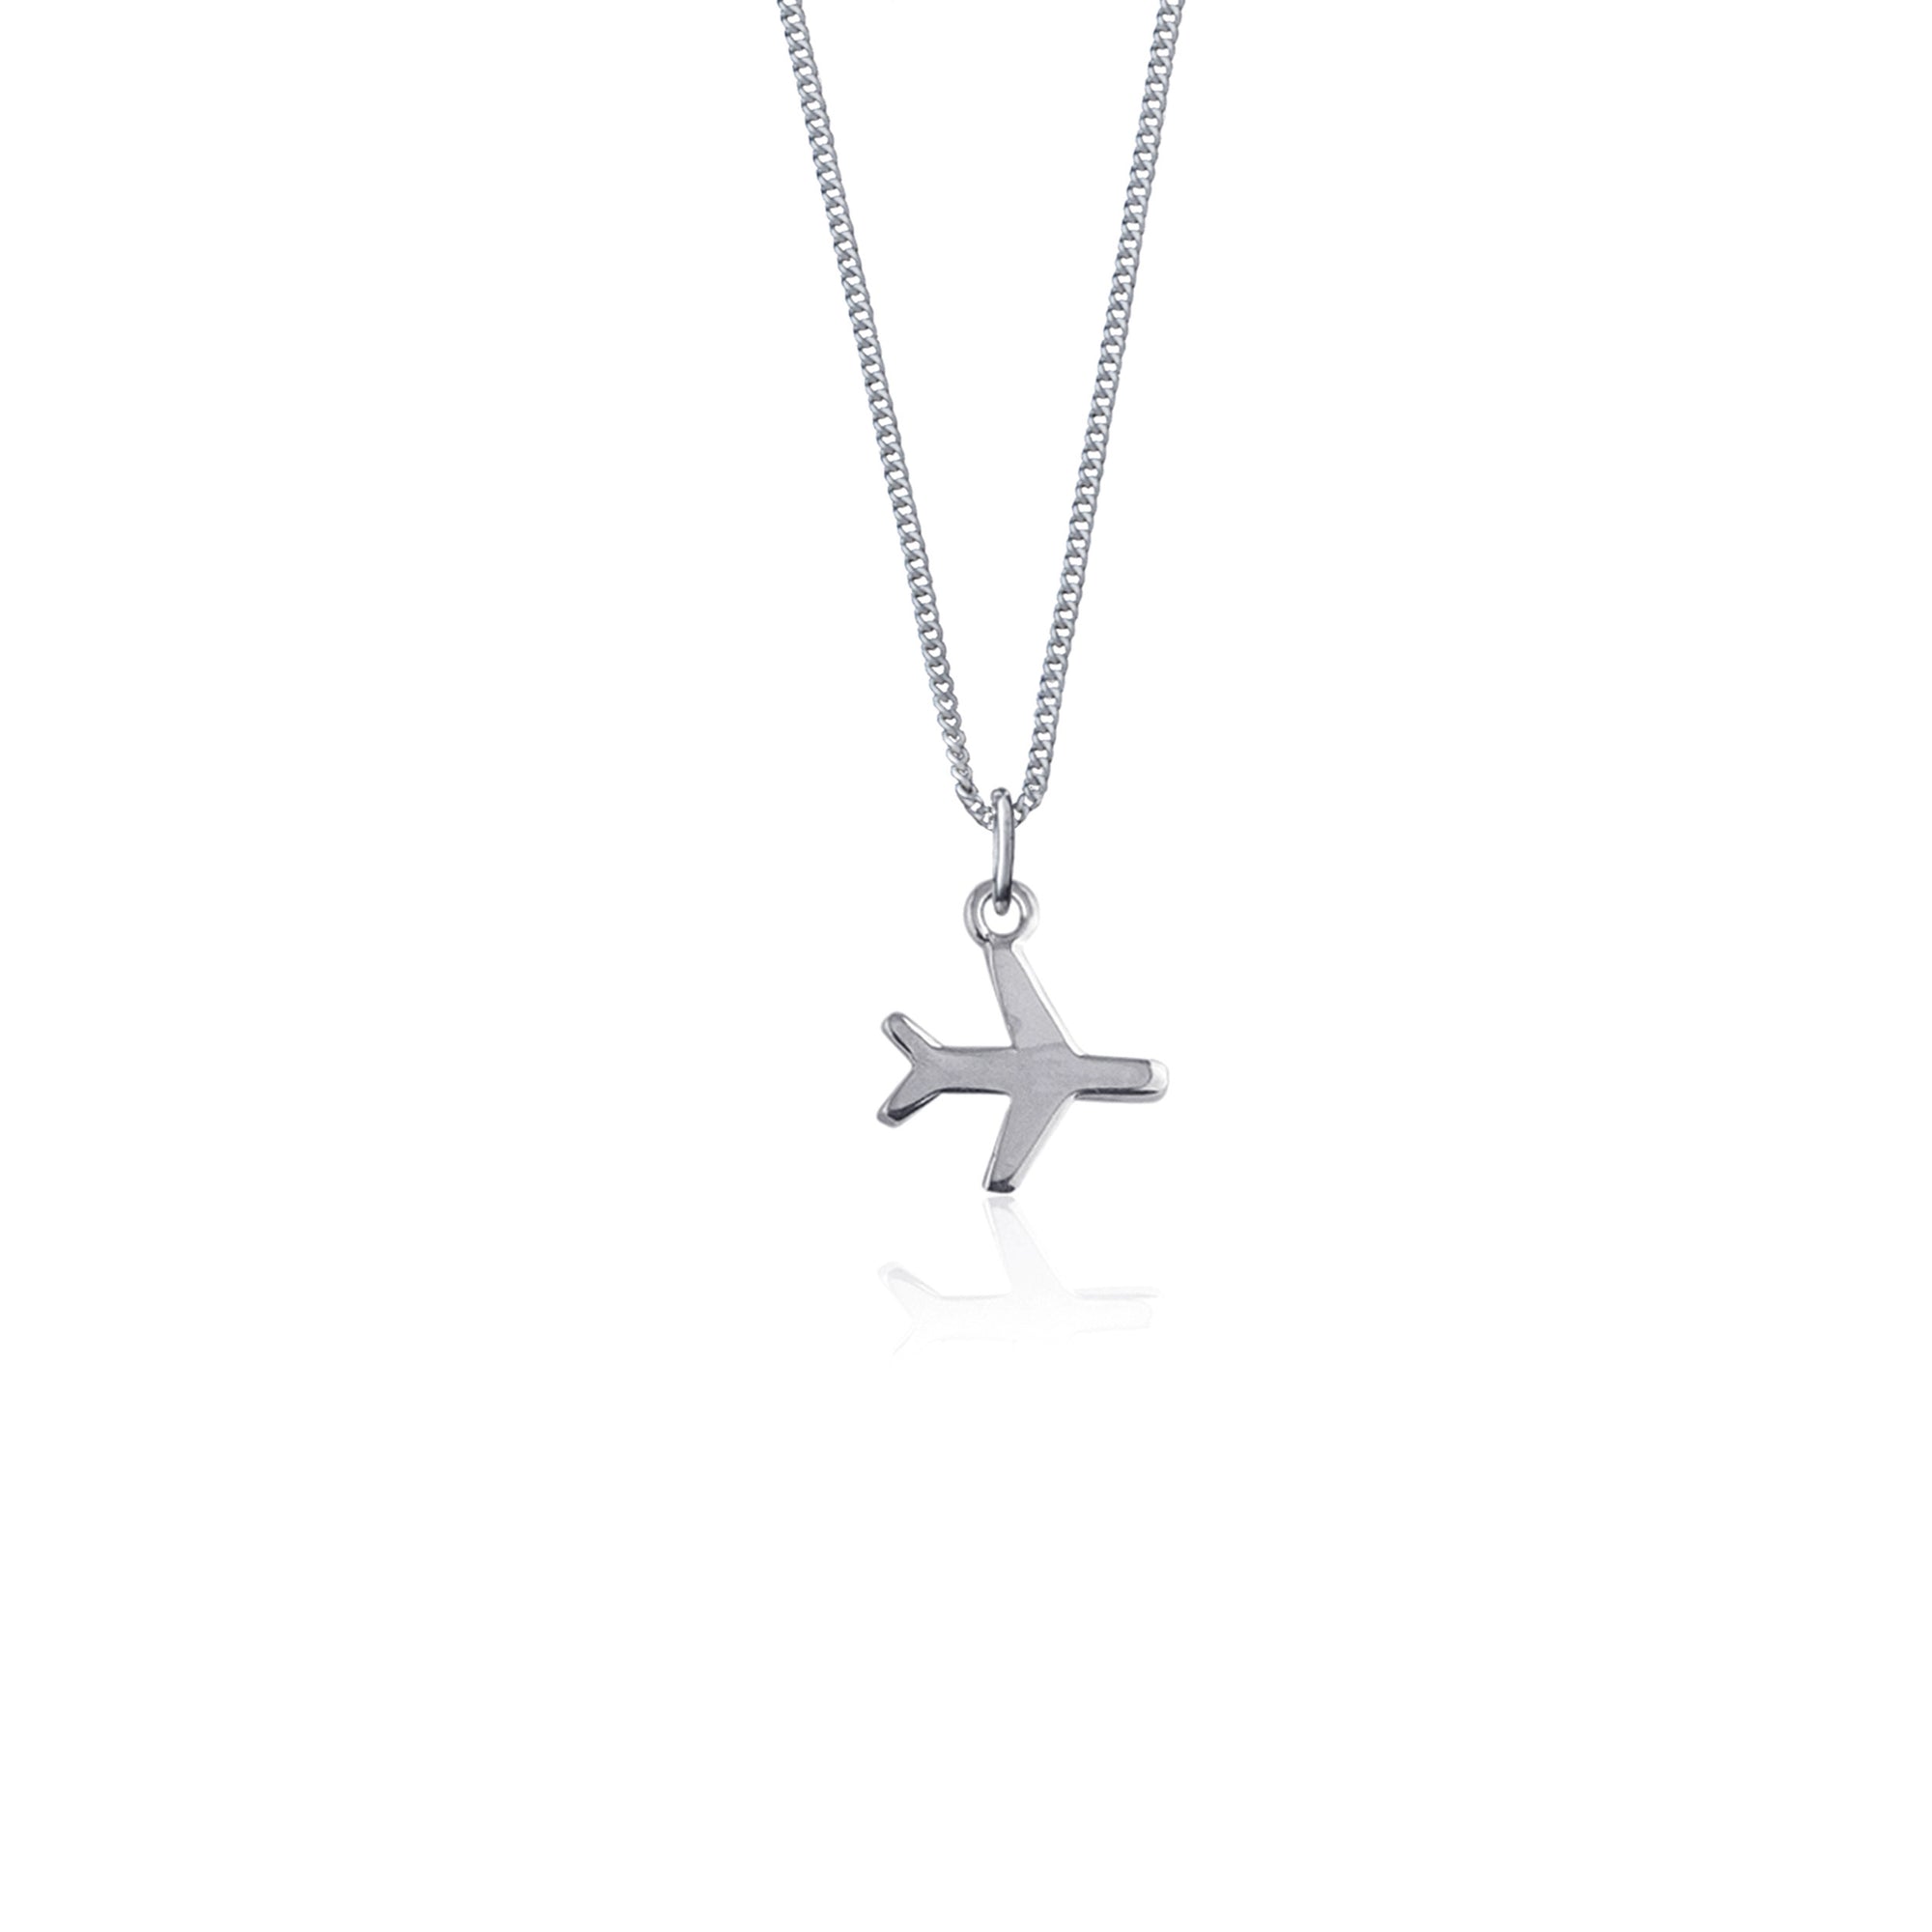 Just Plane Adventurous Charm Necklace - Silver